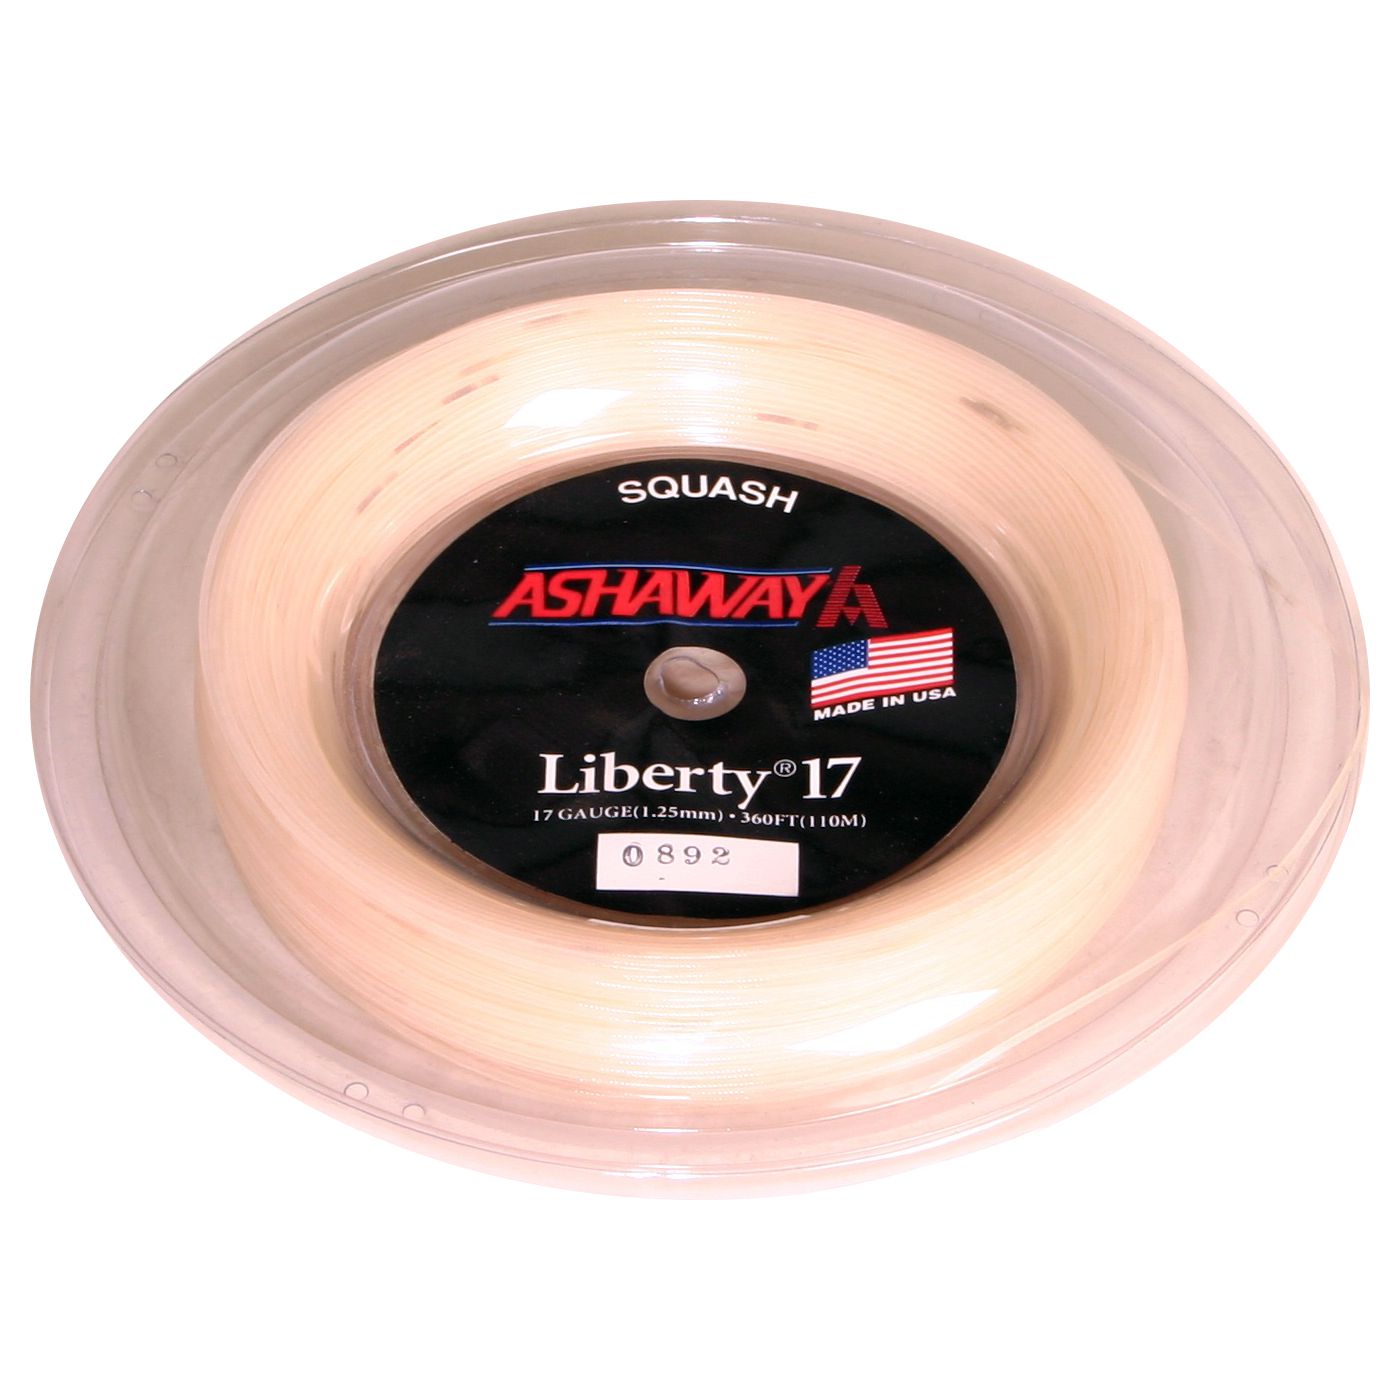 Ashaway Liberty 17 Squash String - 110m Reel